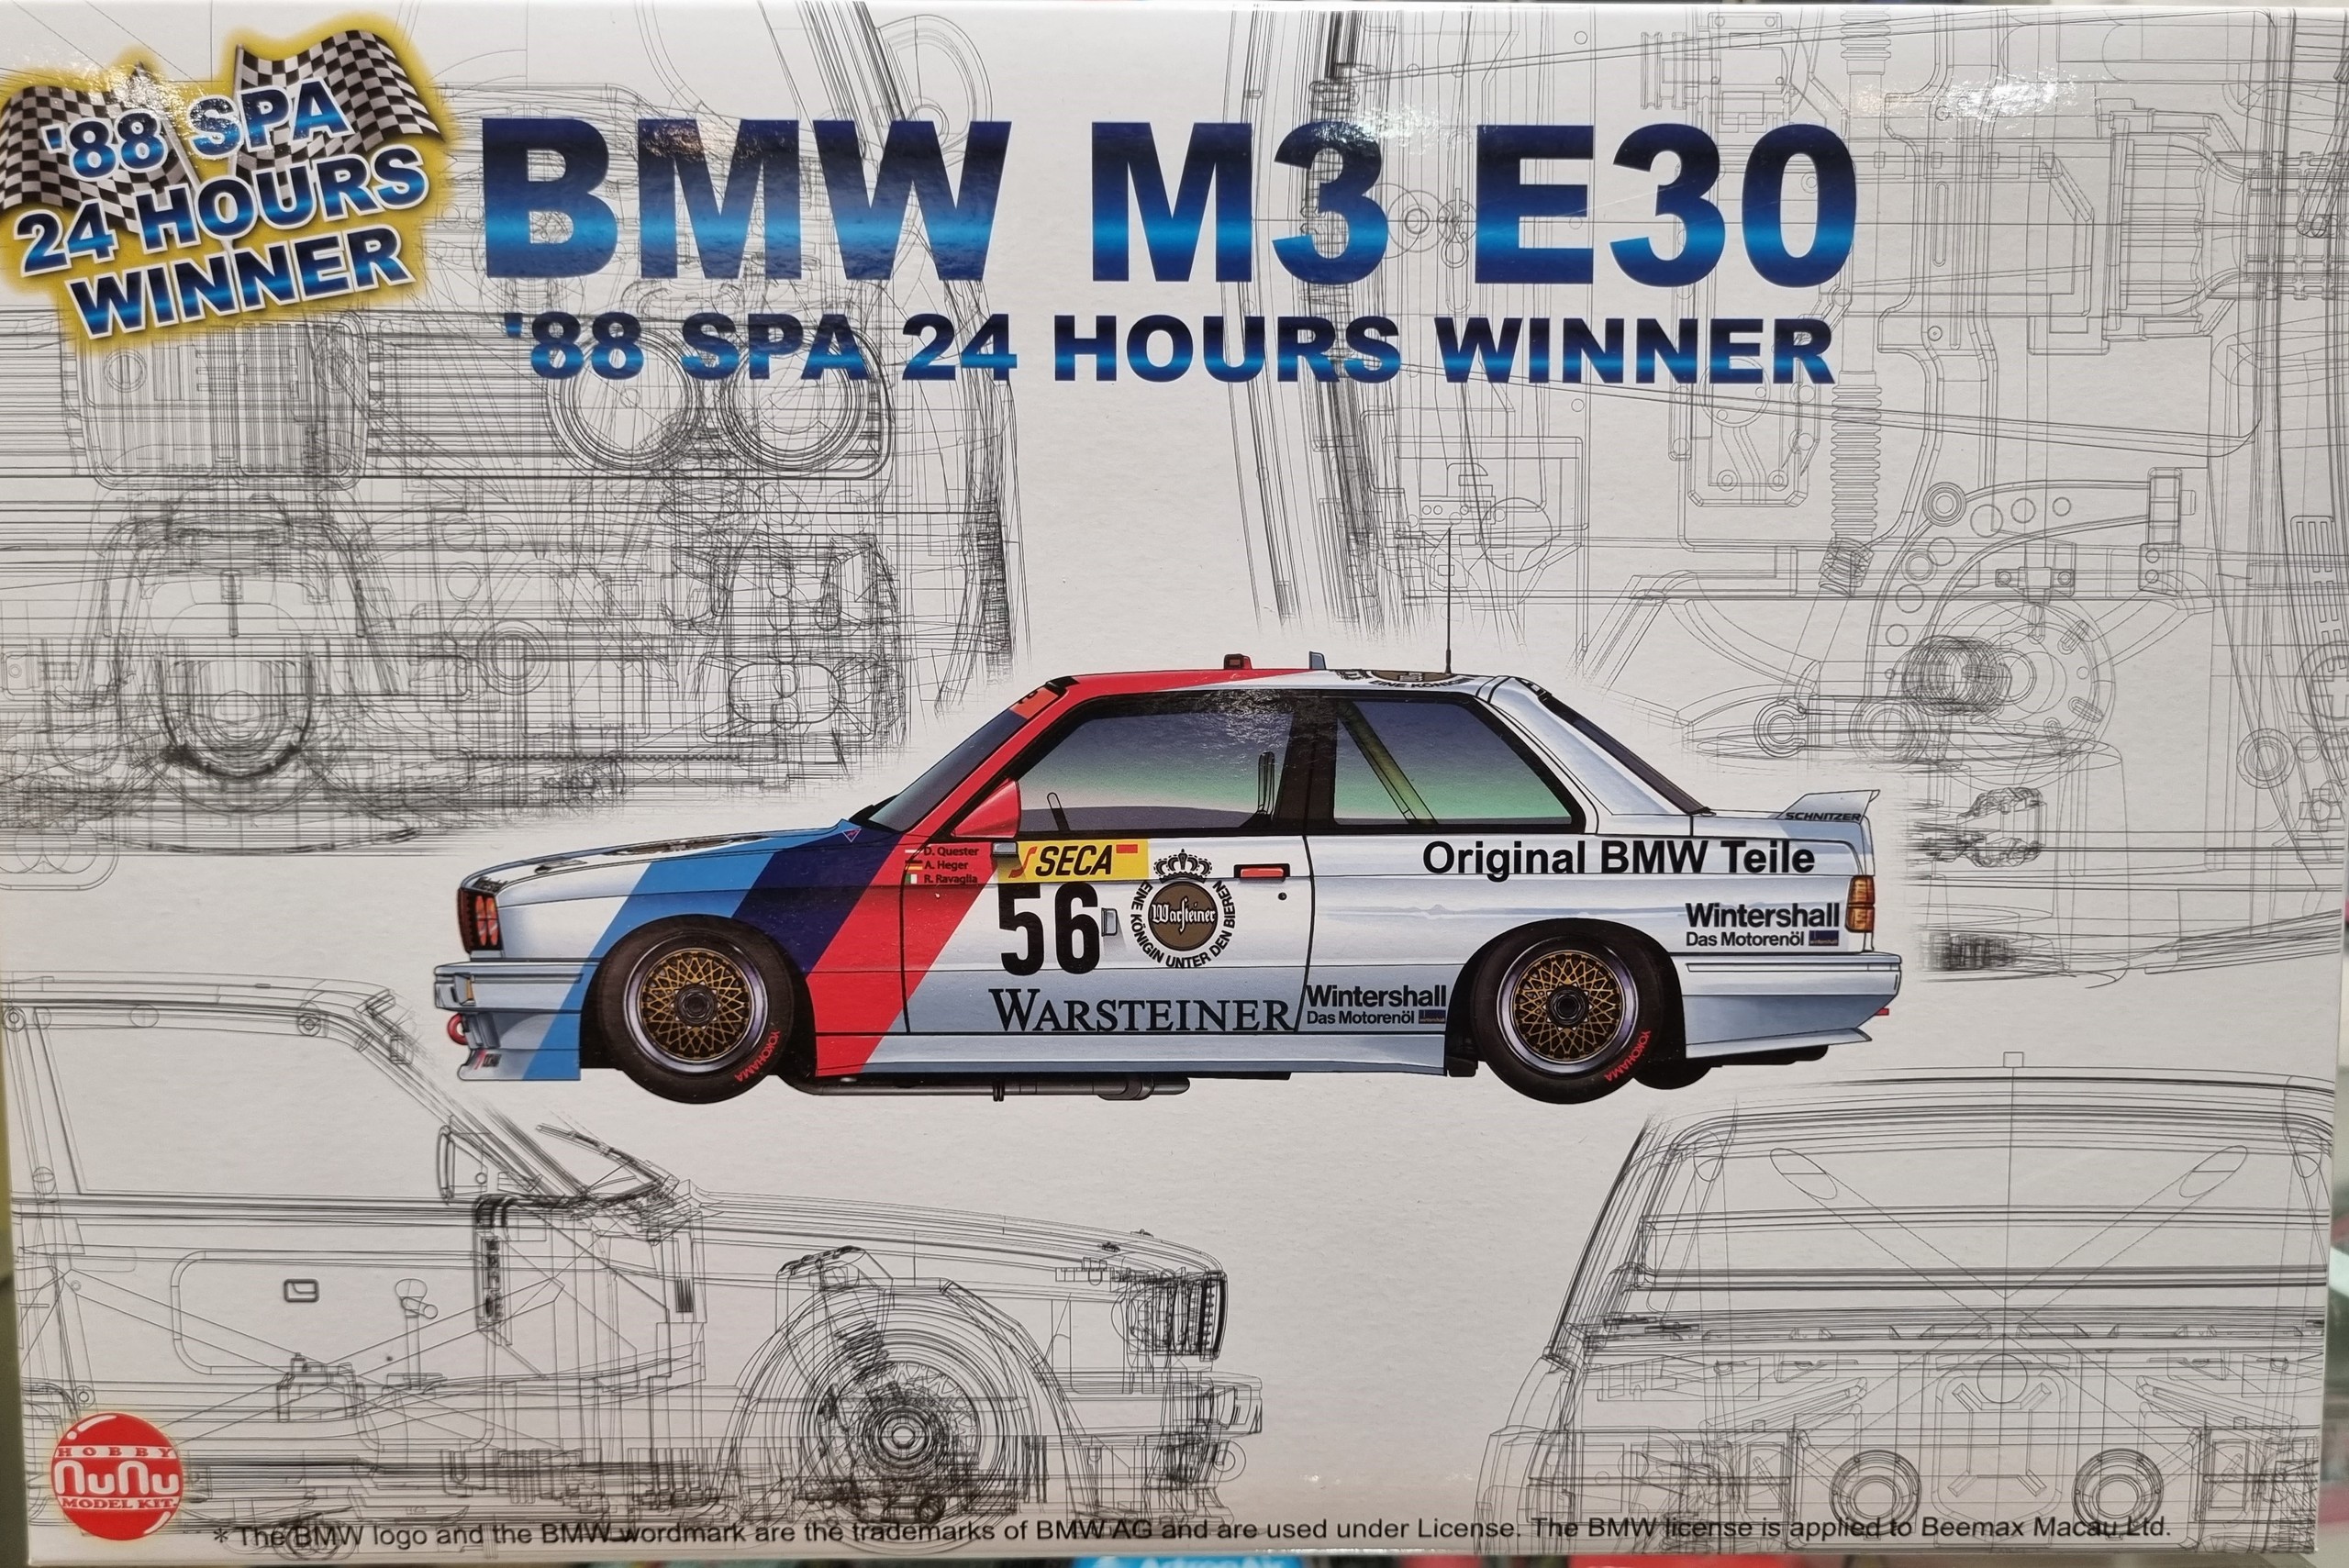 BMW M3 E30 1988 Spa 24 Hour Winner  Kitset 1/24 NuNu Hobby